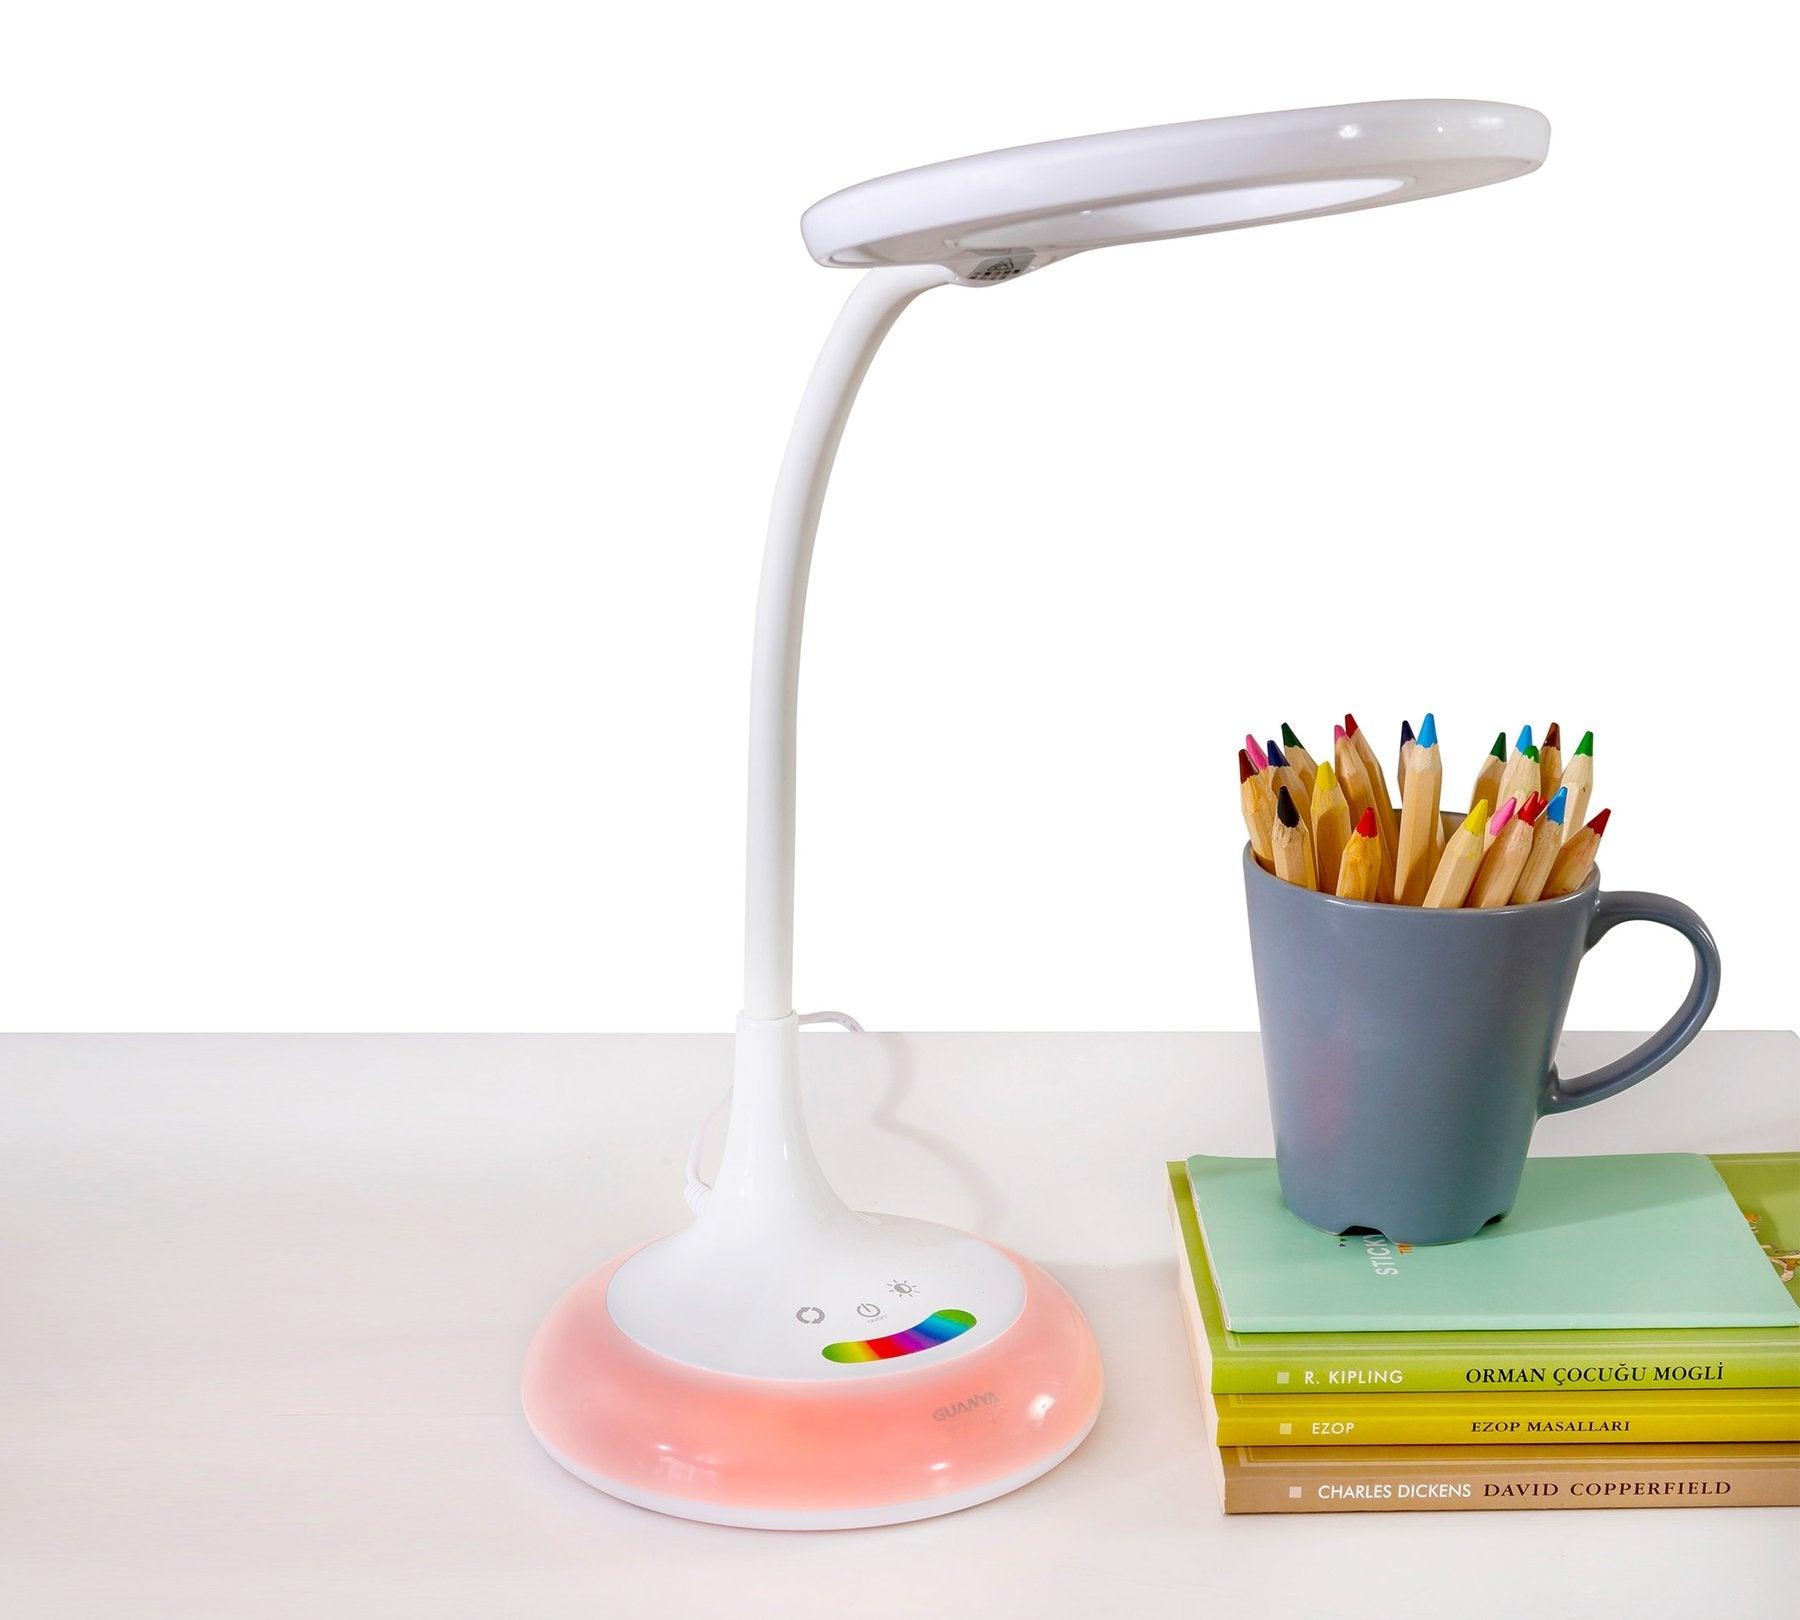 Cilek Smart Led Table Lamp - Kids Haven